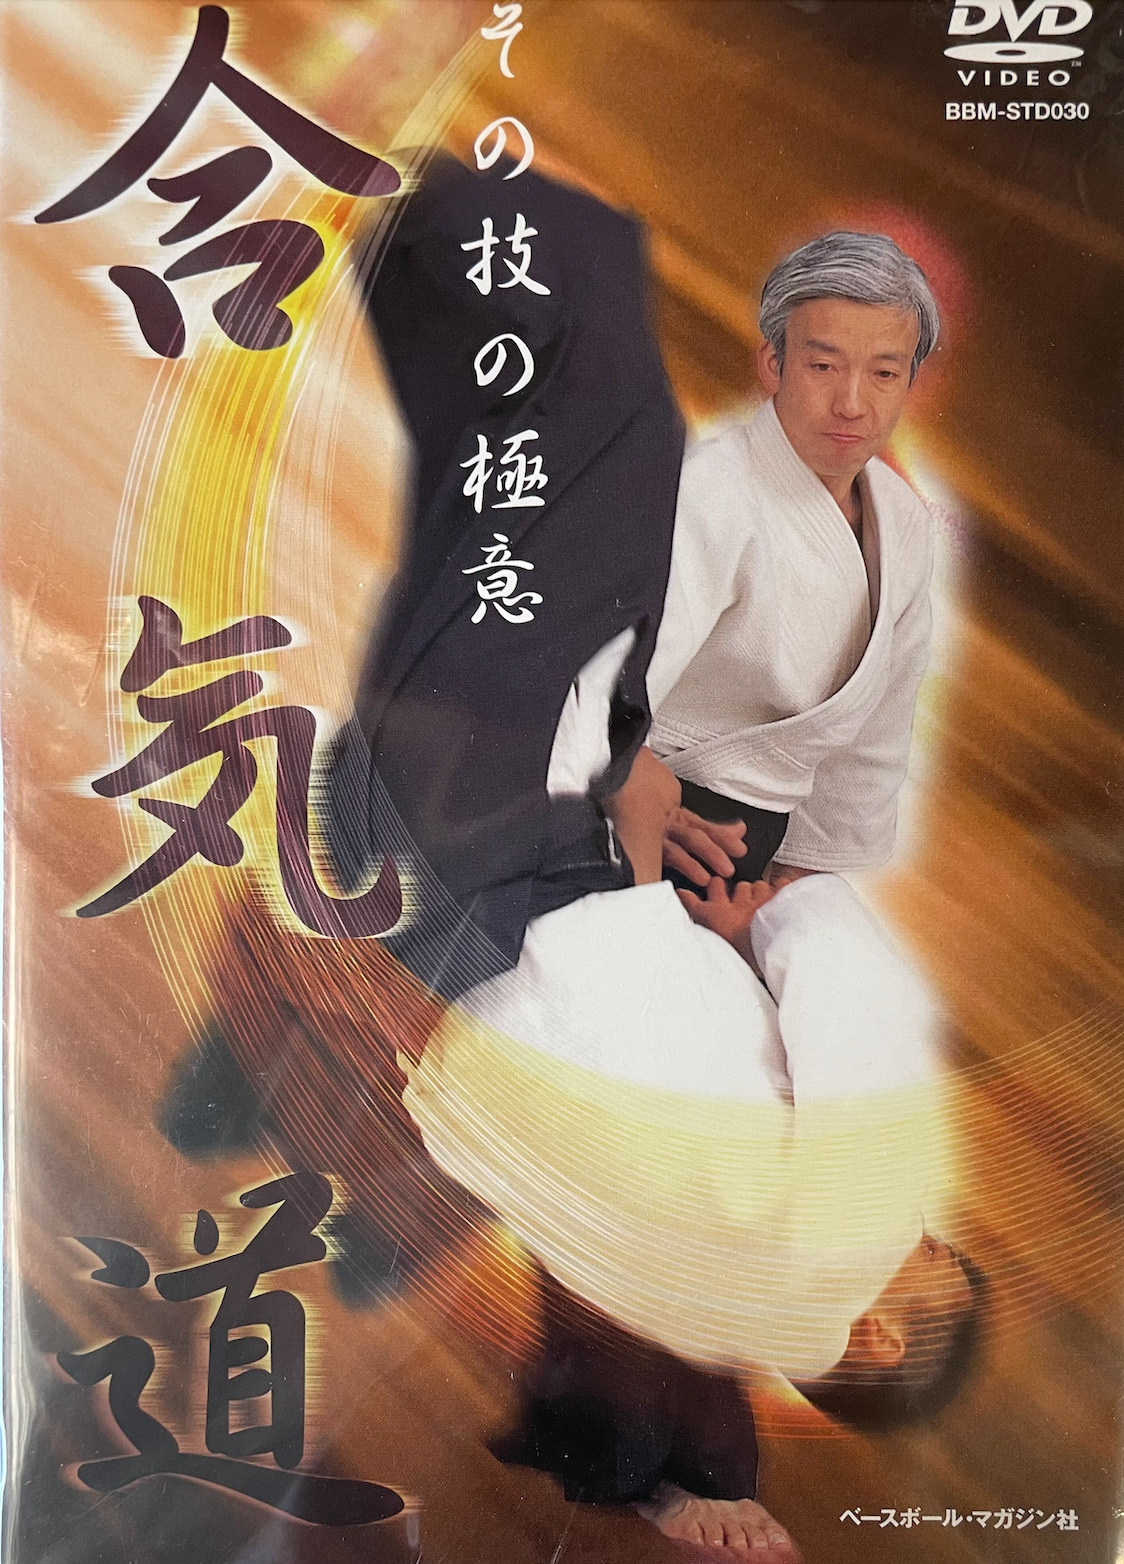 The Secret of Aikido Techniques DVD by Moriteru Ueshiba (Preowned) - Budovideos Inc